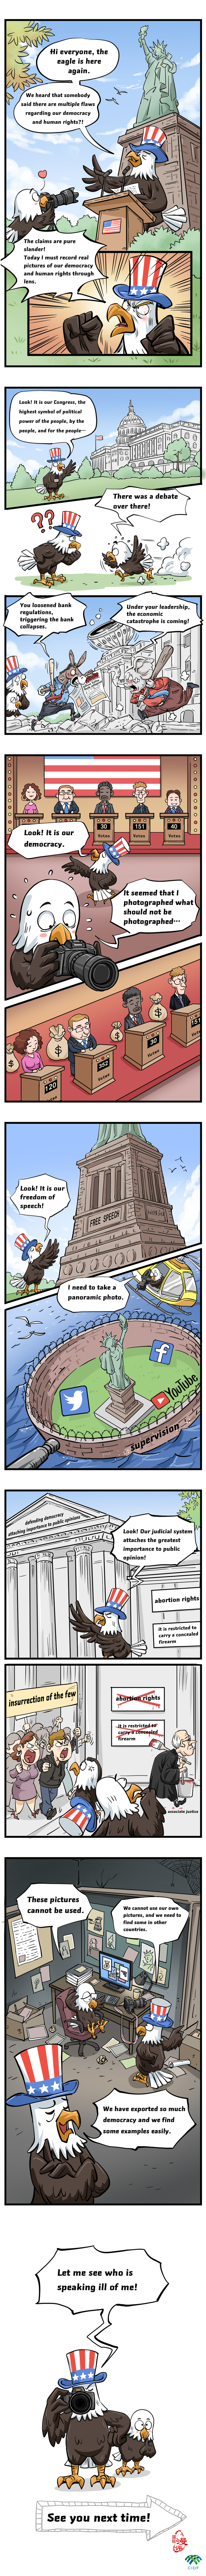 【Editorial Cartoon】Comics | The Facade of American Democracy (1)_fororder_英语